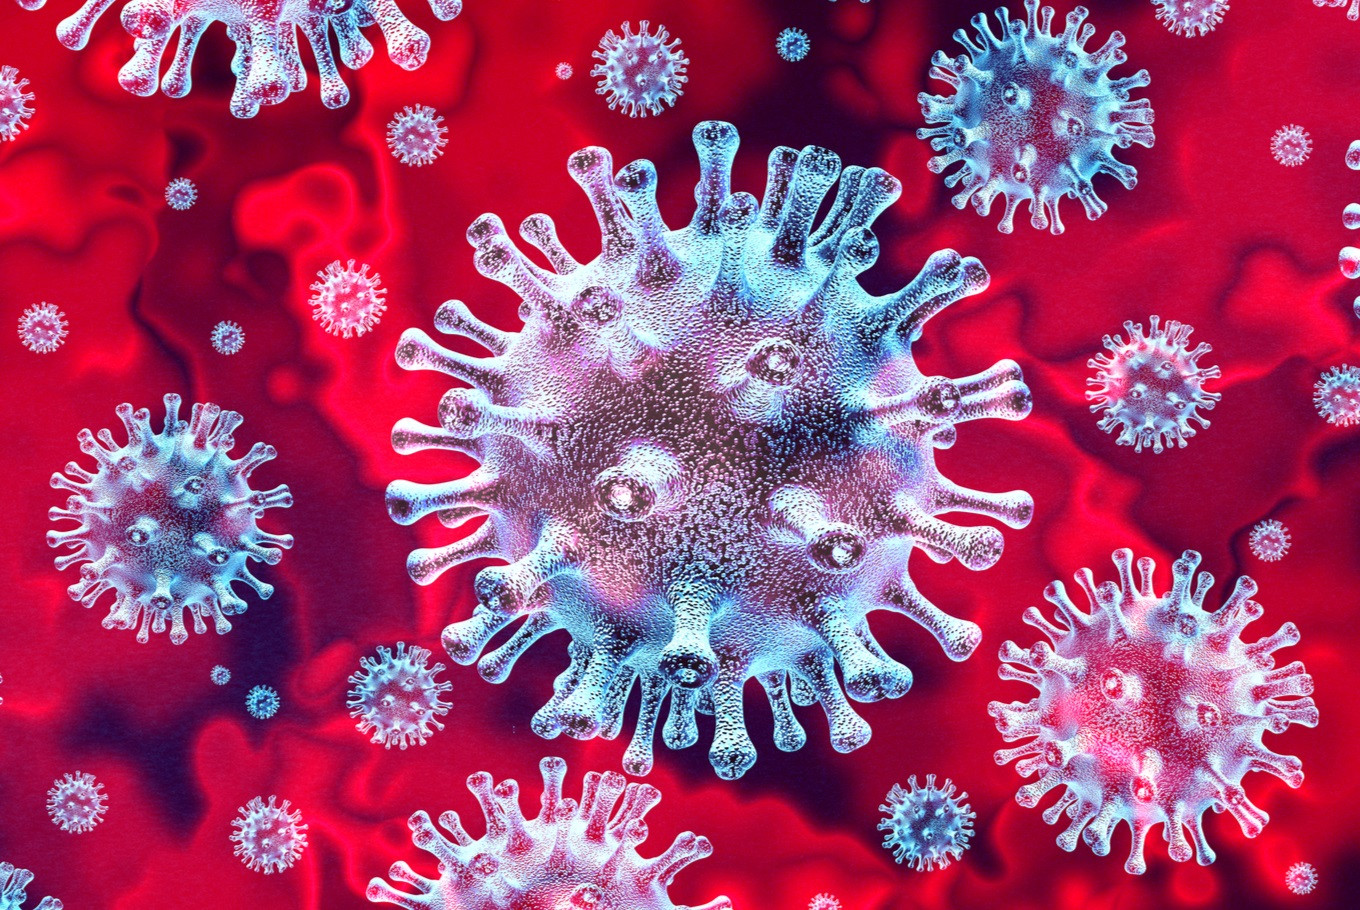 coronavirus may be the 'disease x' health agency warned about ...